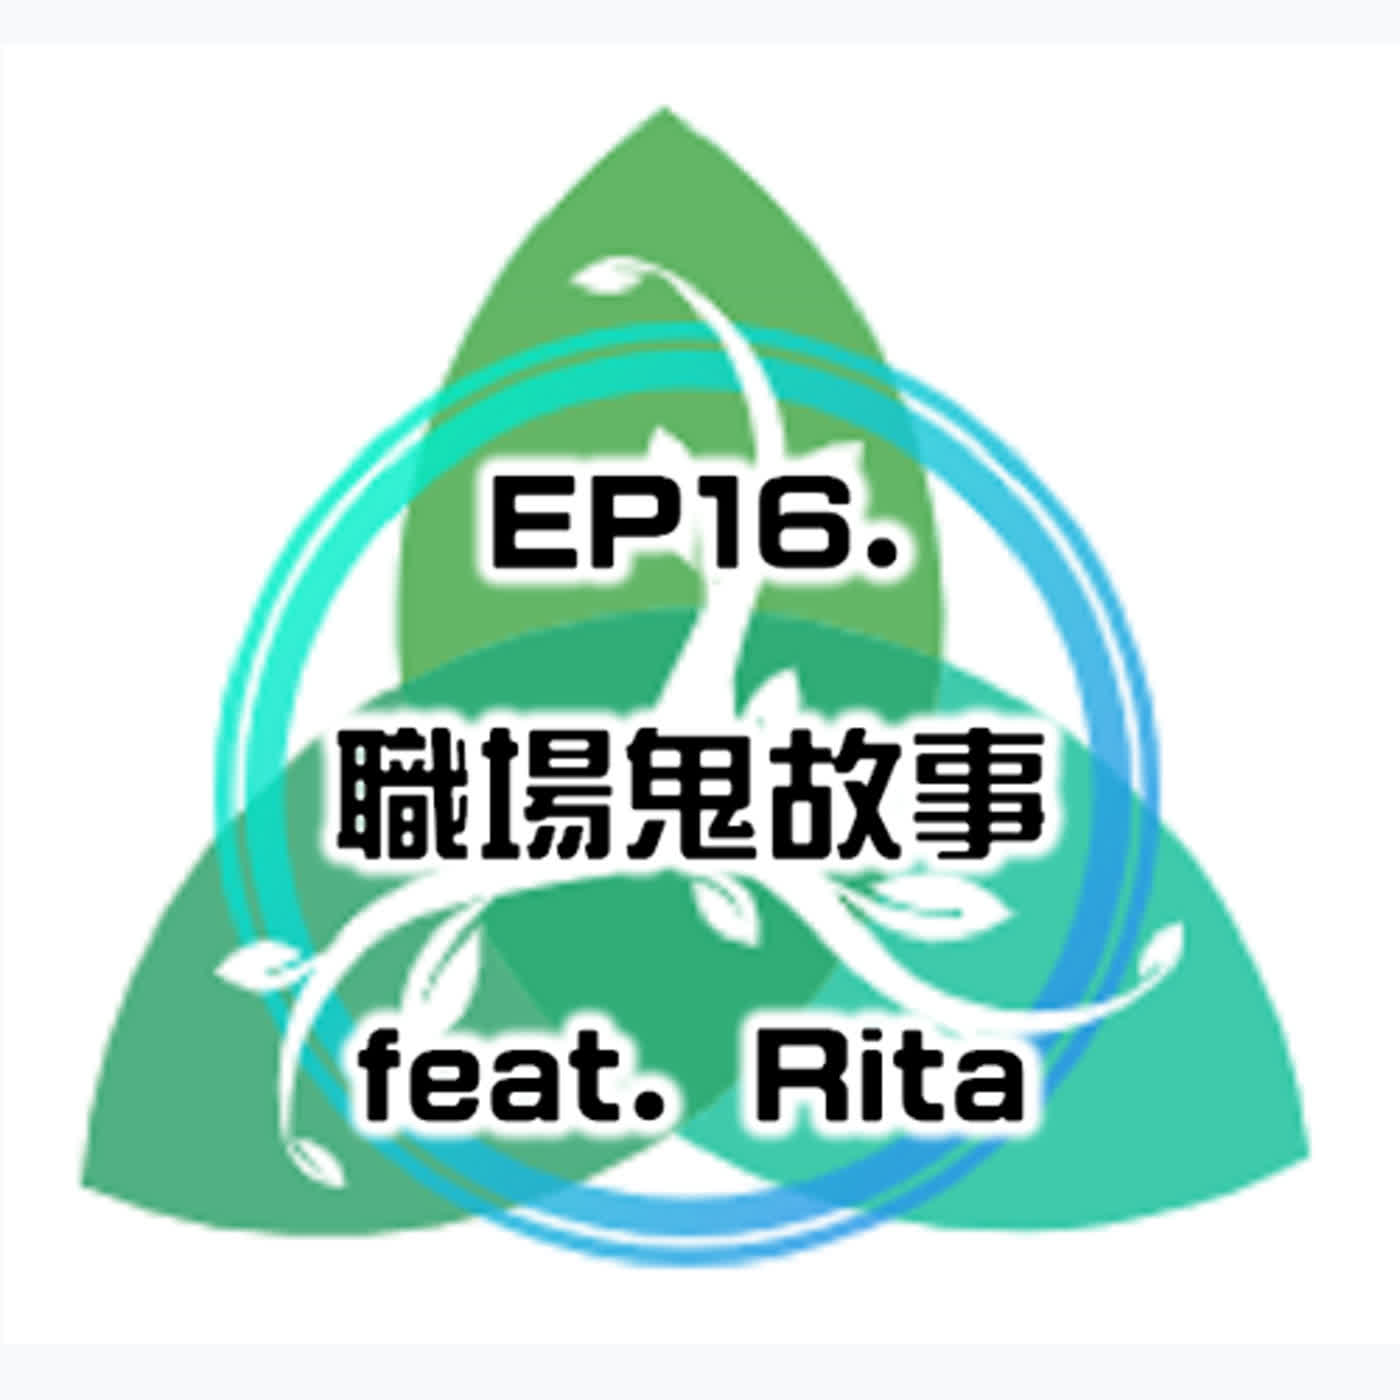 EP16 職場鬼故事 feat. Rita